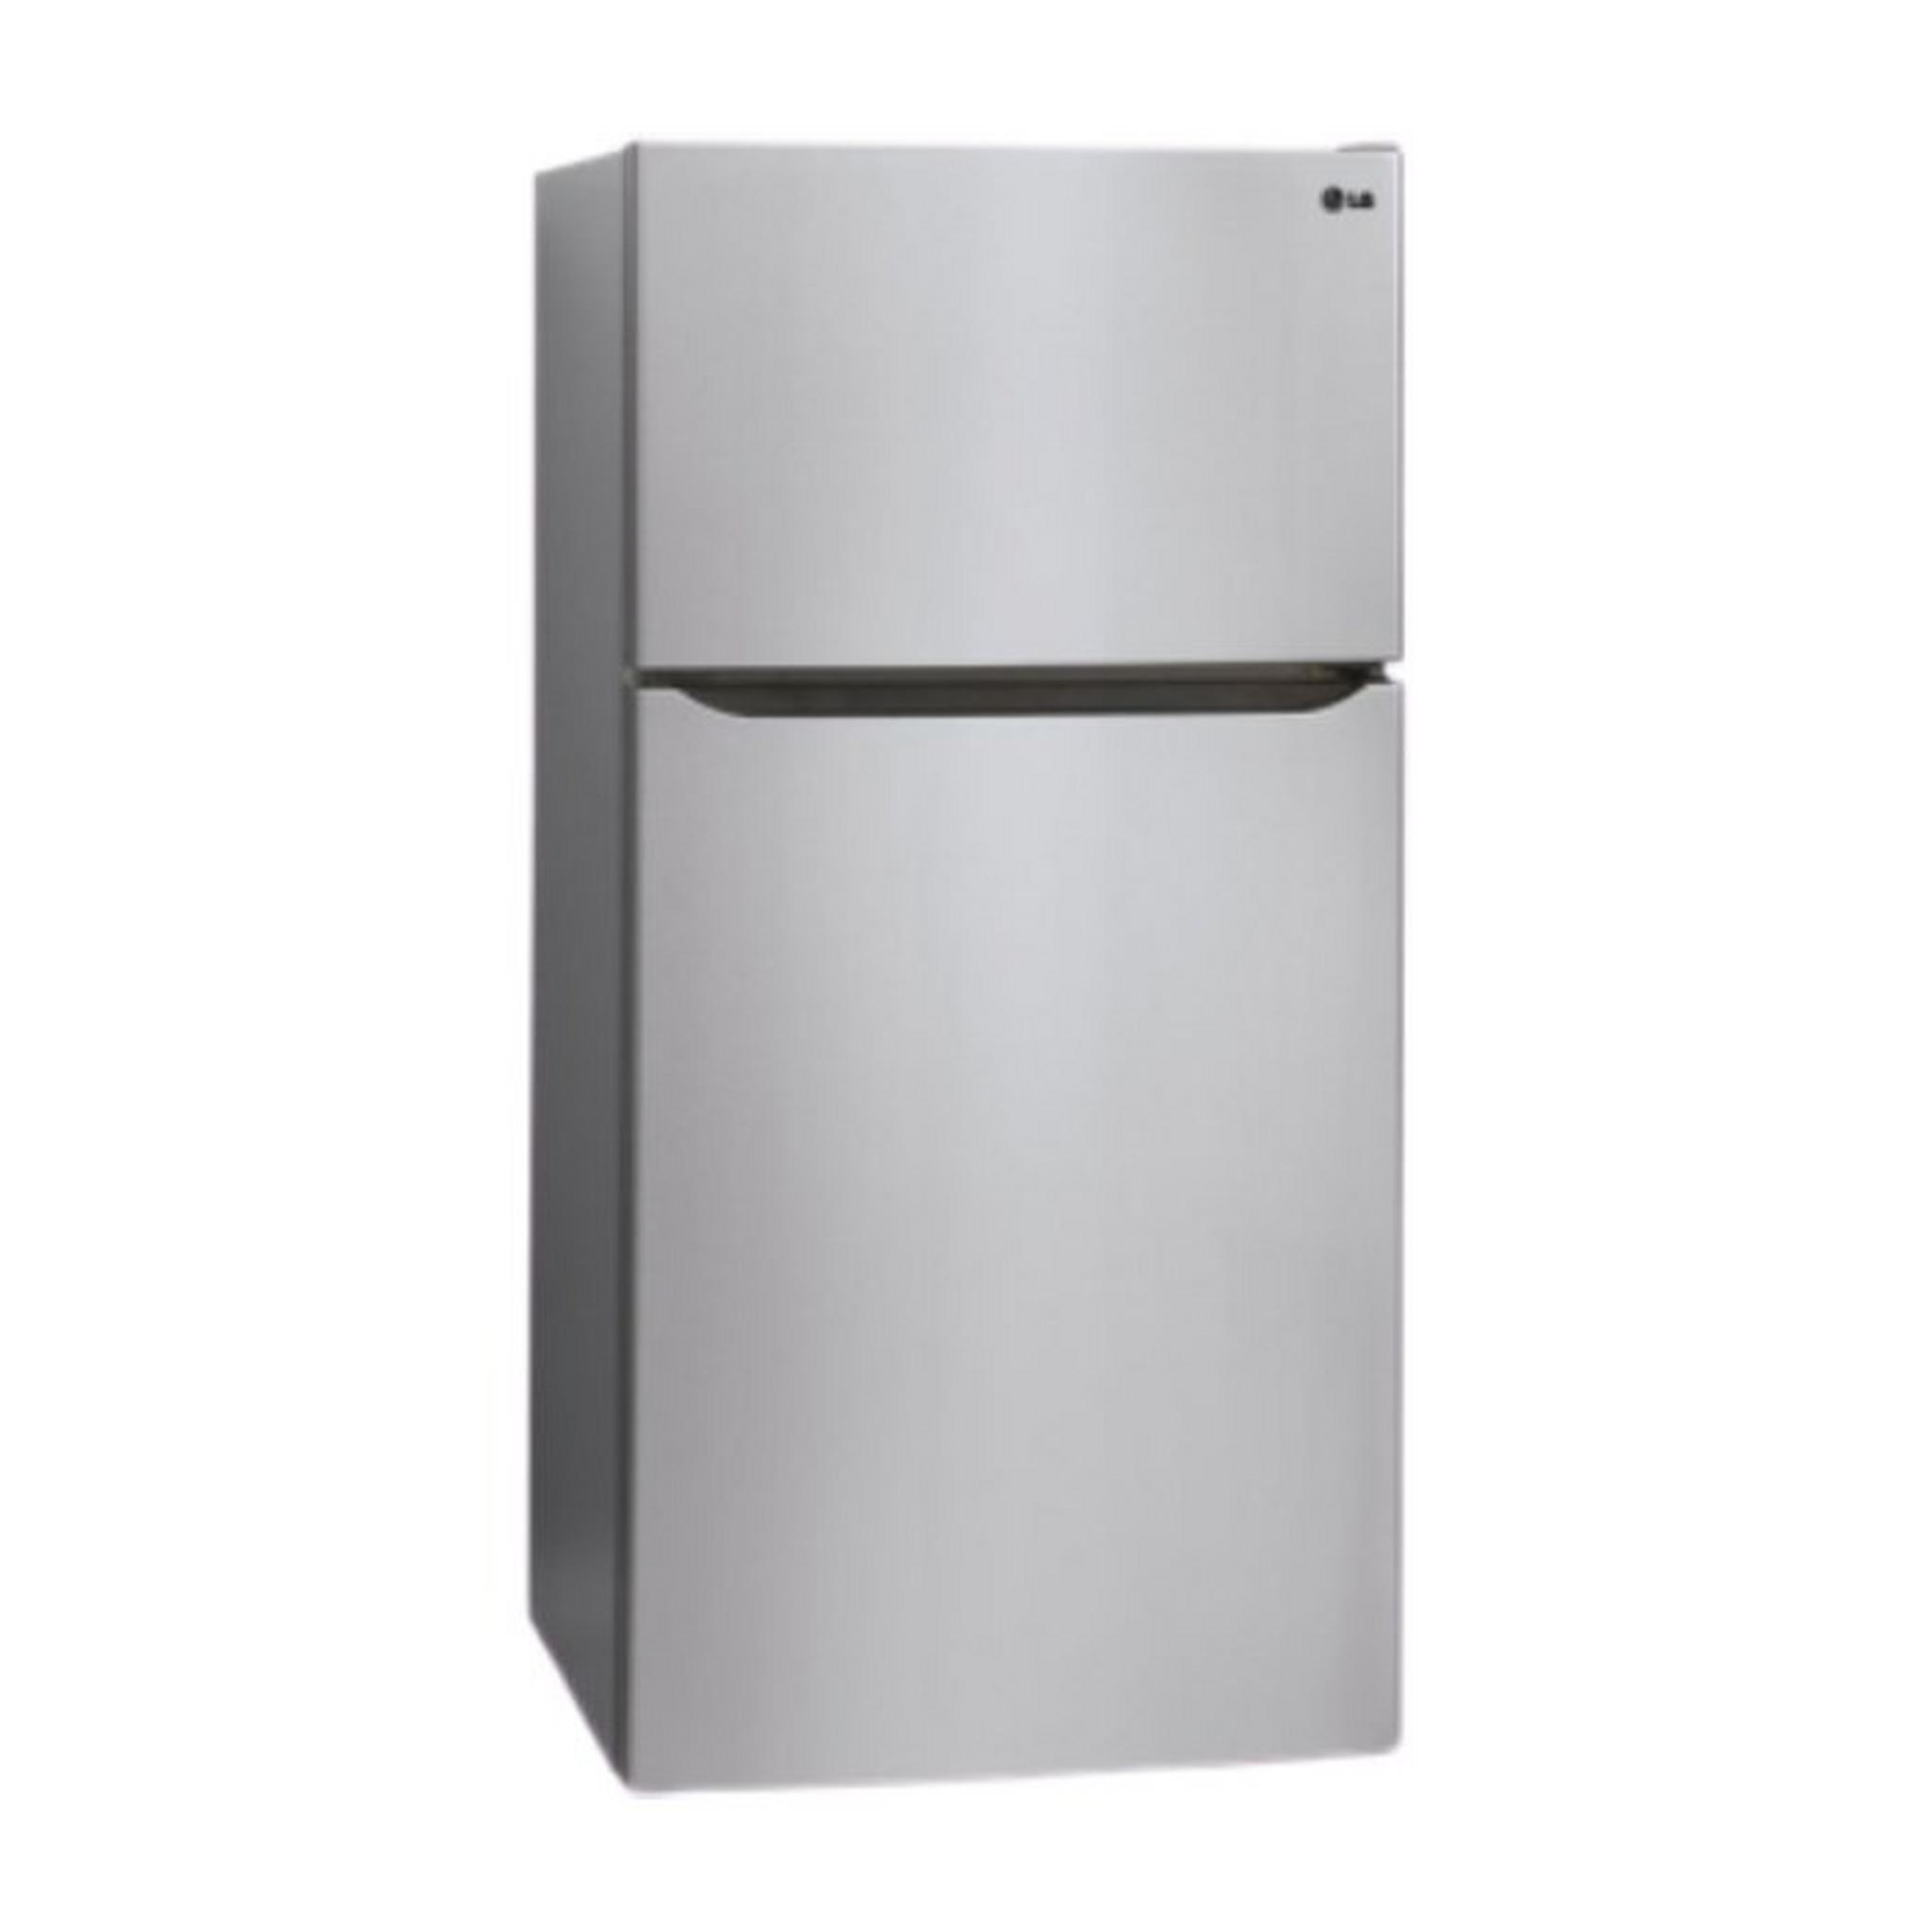 LG 23 CFT Top Mount Refrigerator - Silver (LT24CBBVLN)